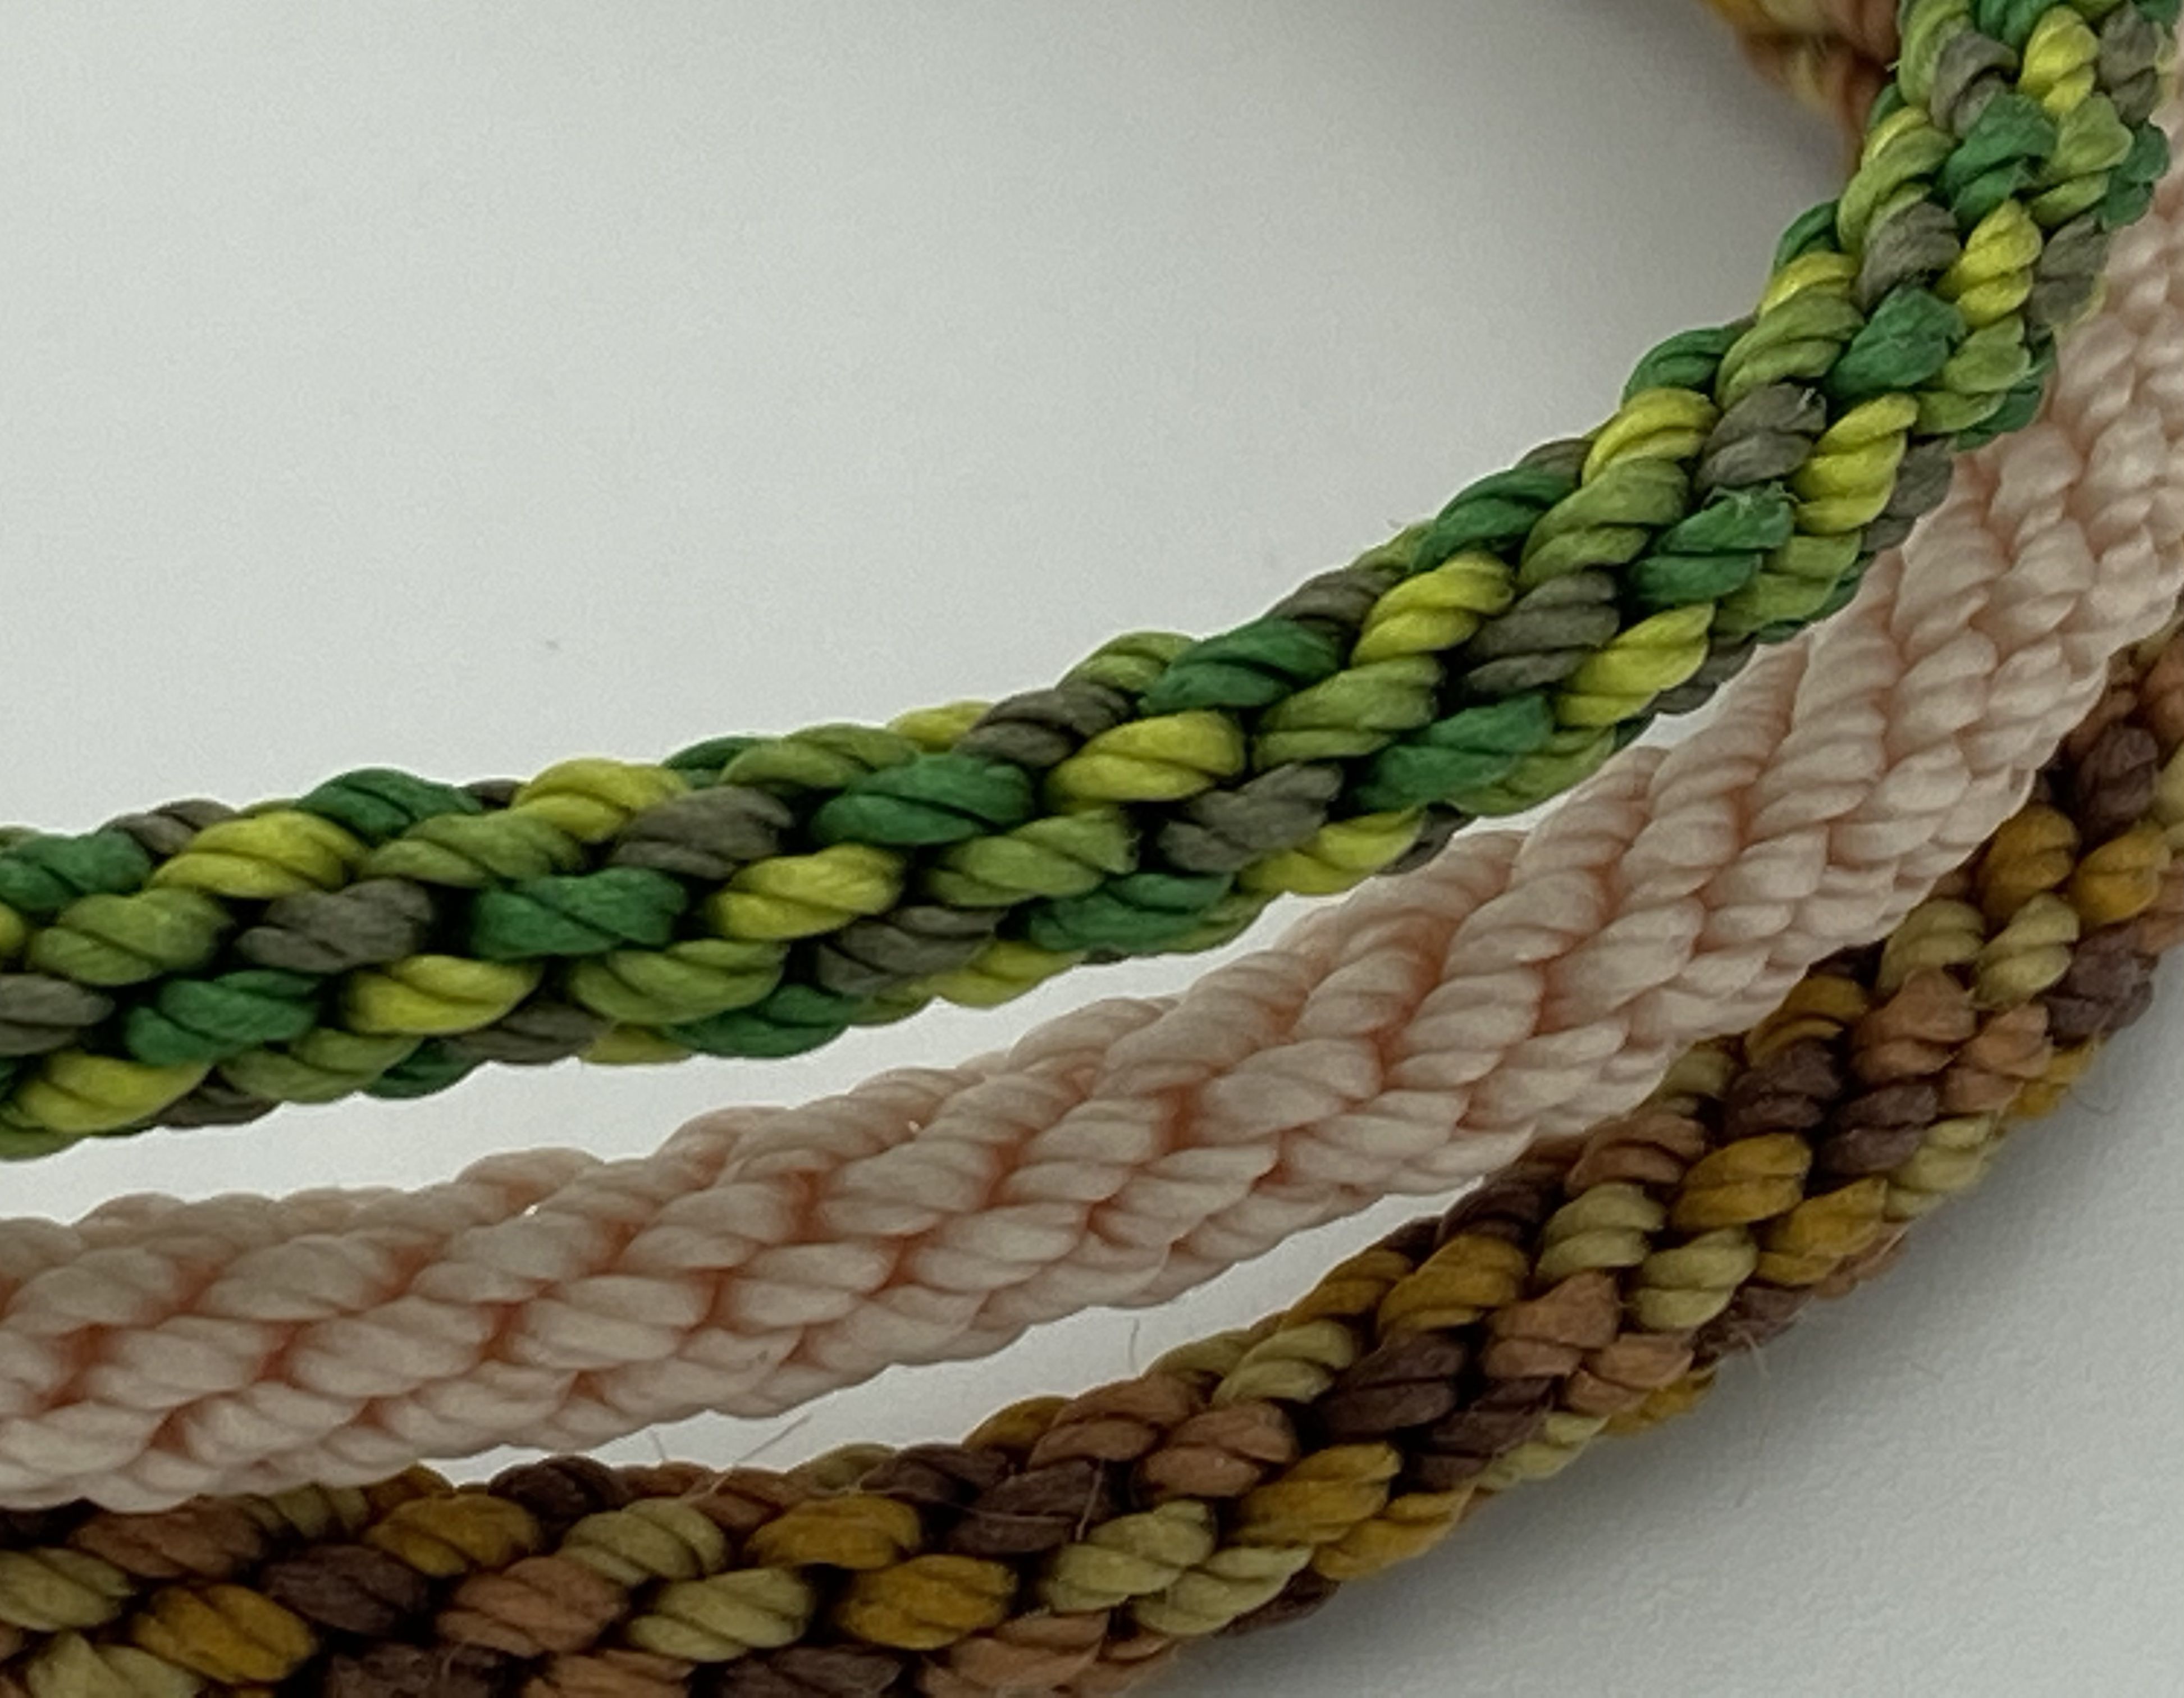 Triple Braided/Woven Kumihimo Bracelet - Green/Brown/Nude Colours - Handmade Japanese Wristband/Bracelet